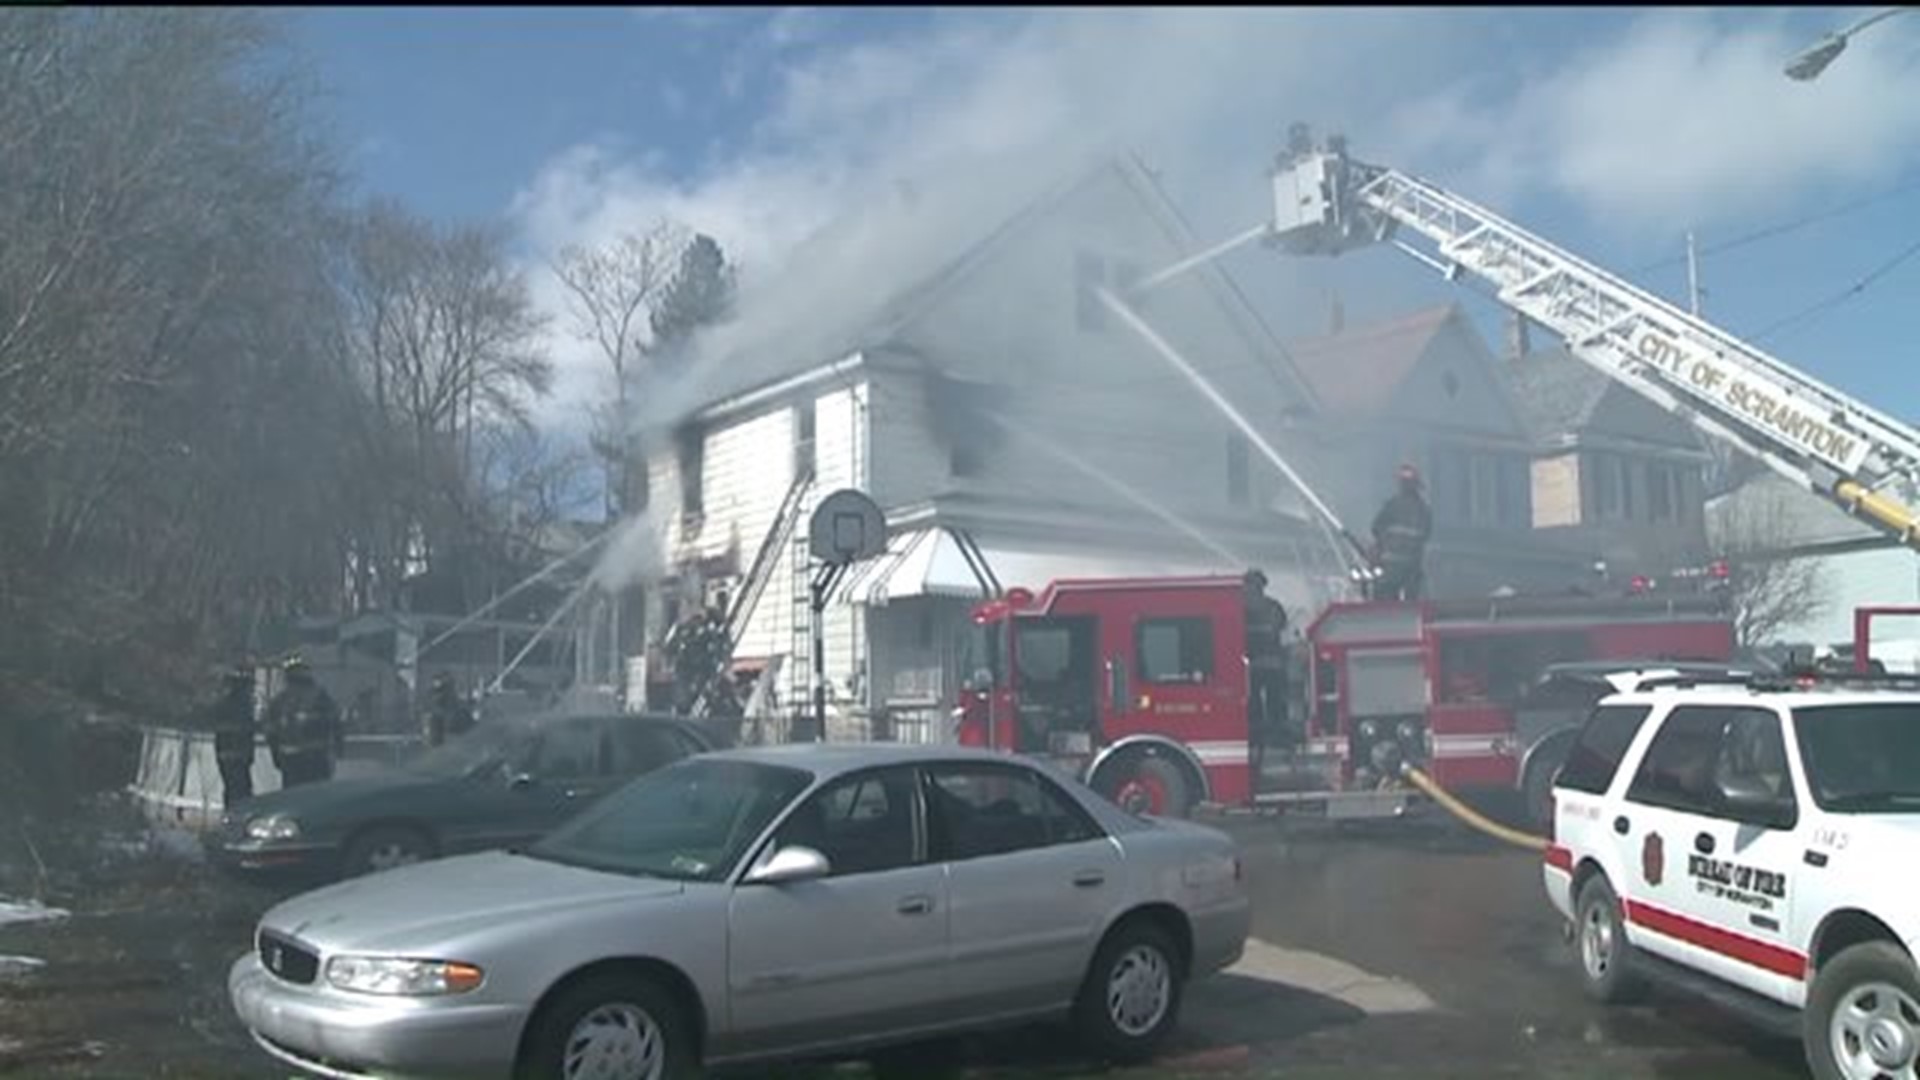 Crews Battle Smoky Fire in Scranton